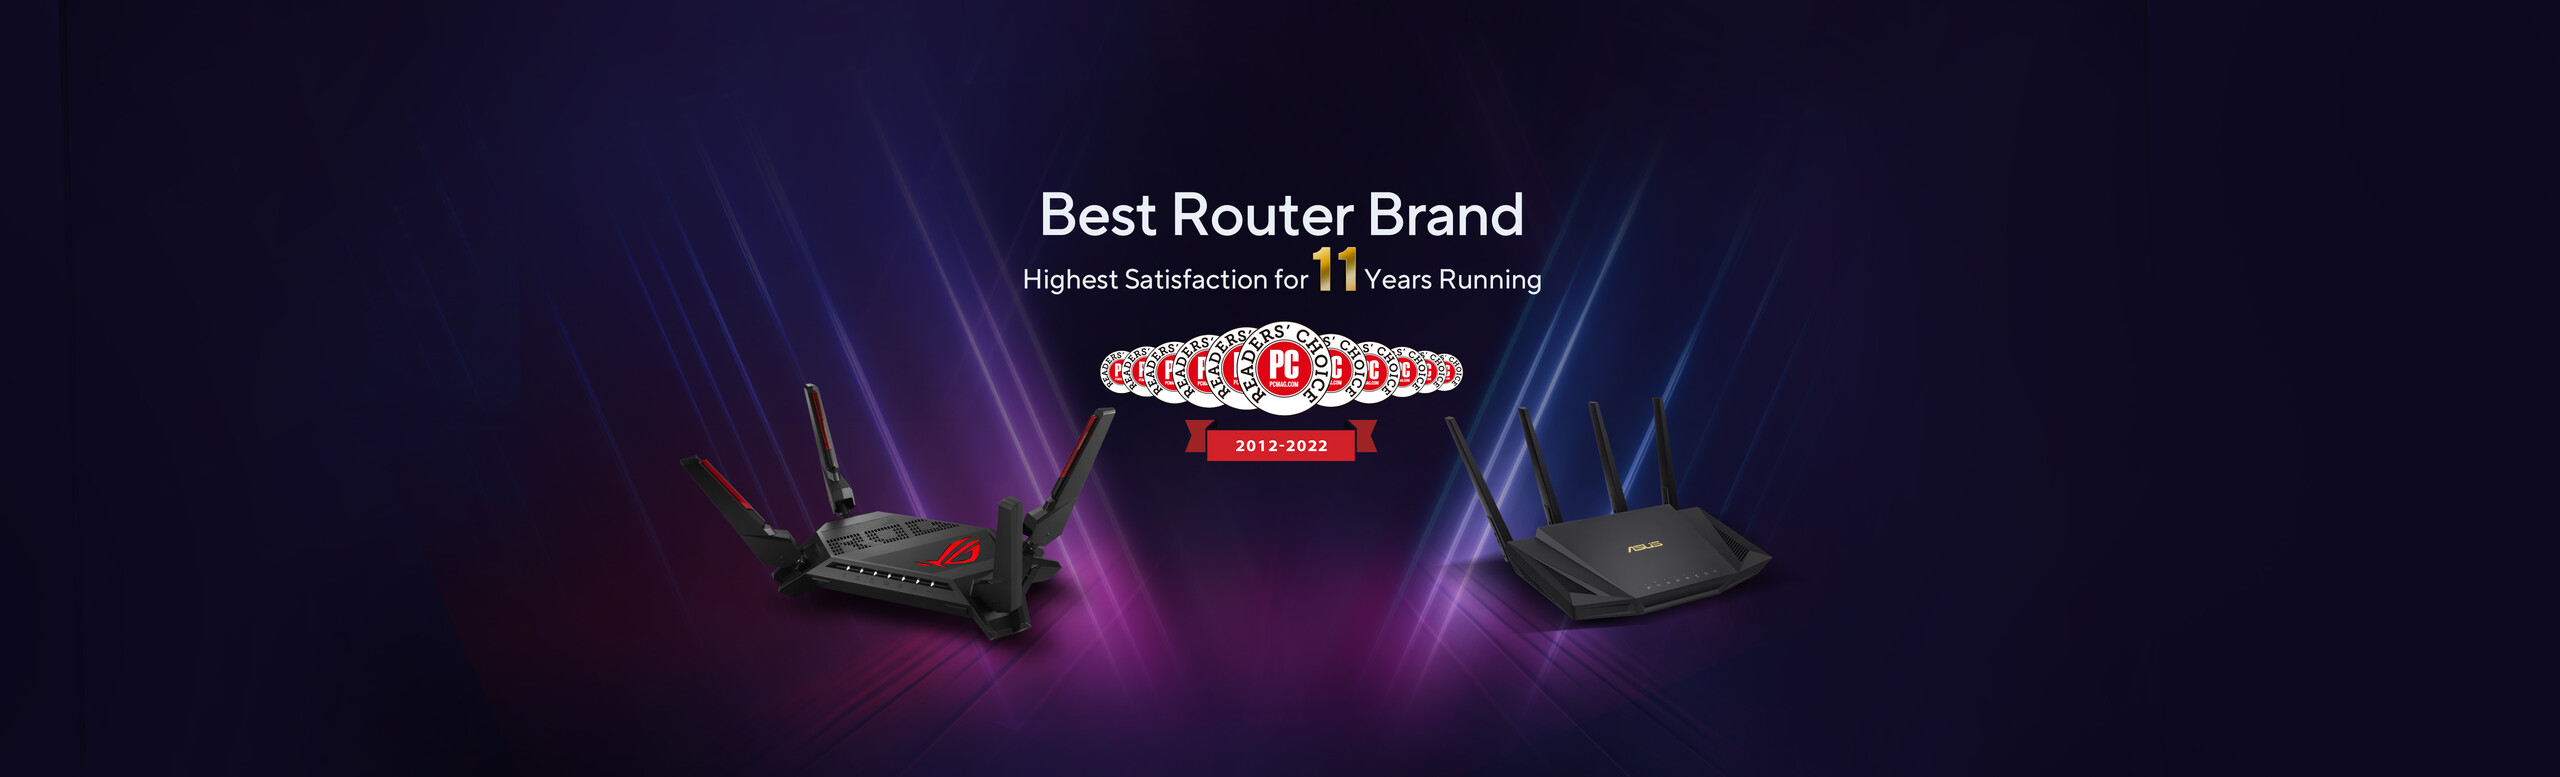 Best Router Brand